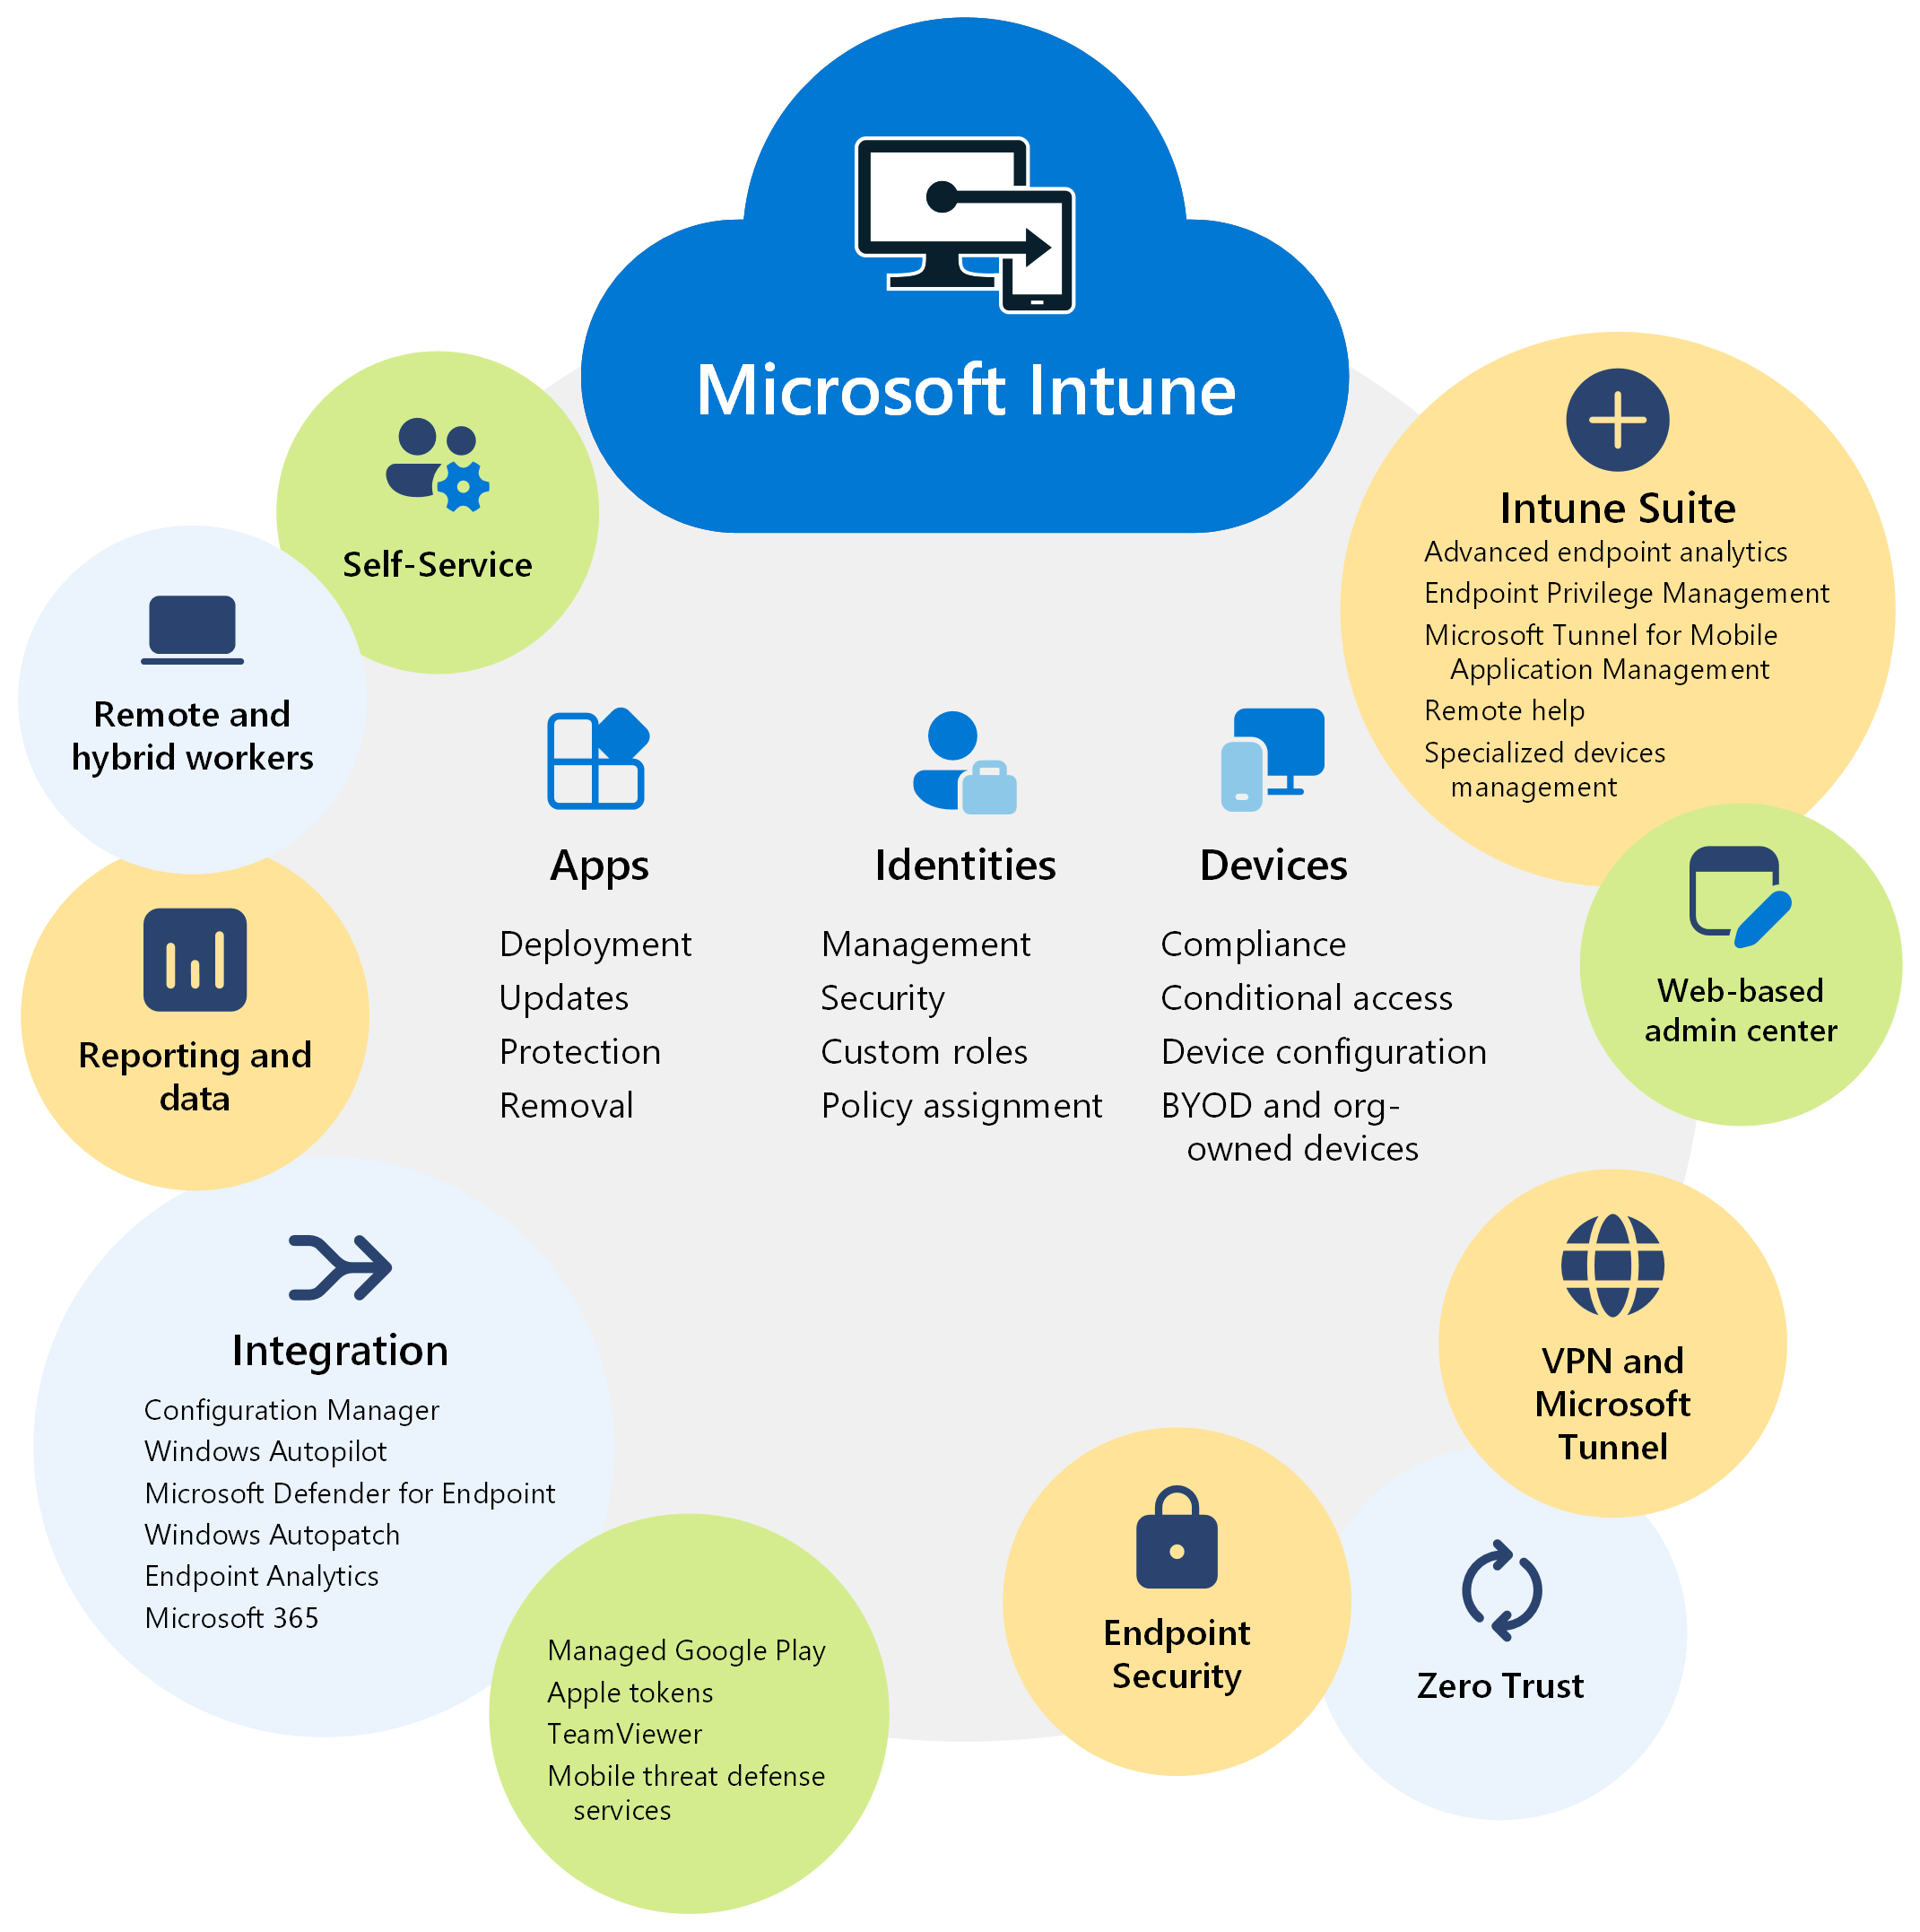 Microsoft Intuneの特徴と利点を示す図。